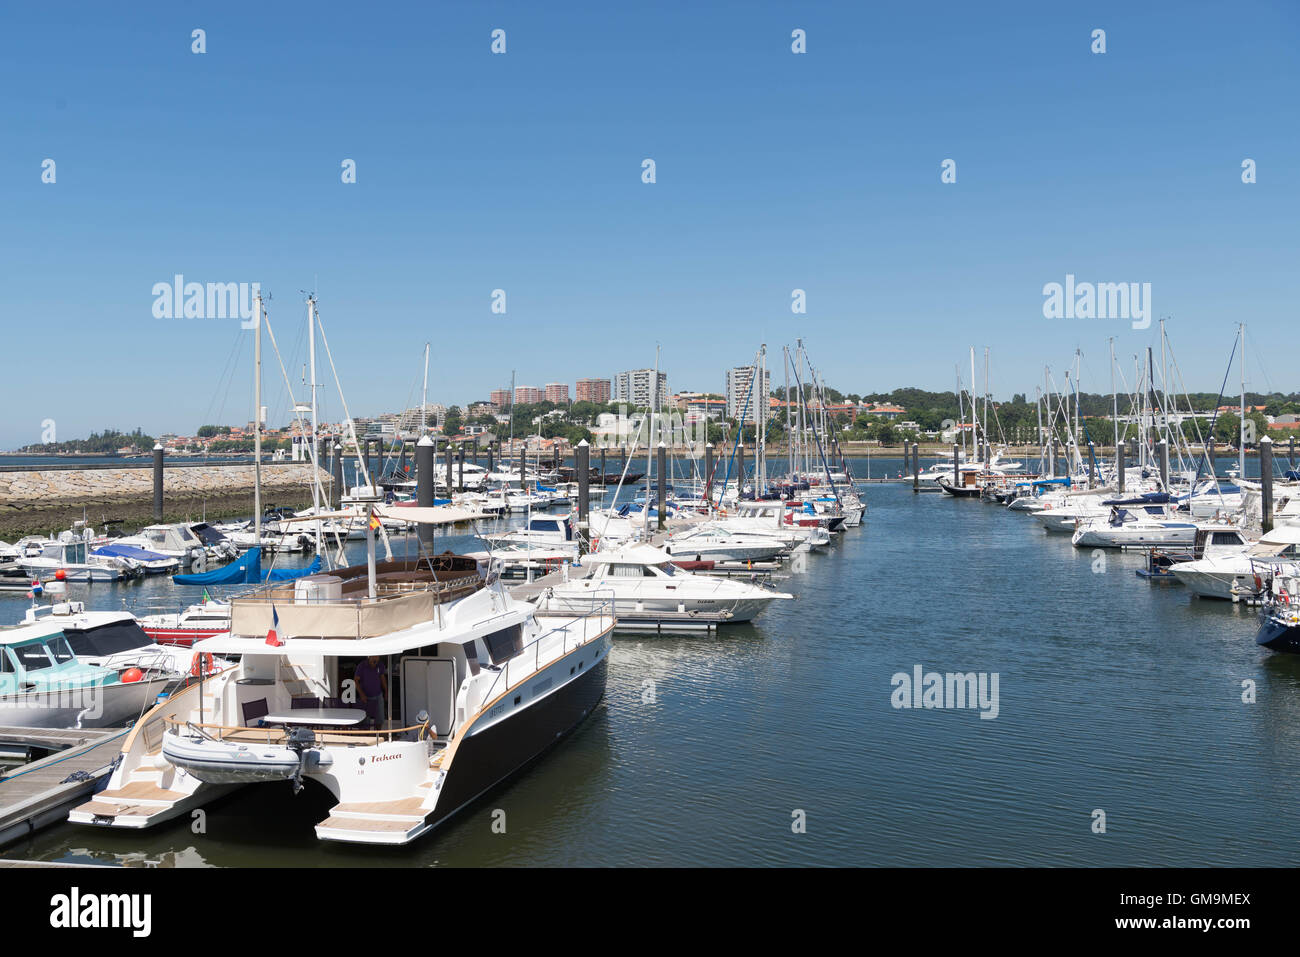 The marina near the small fishing village of Afurada, Portugal Stock Photo